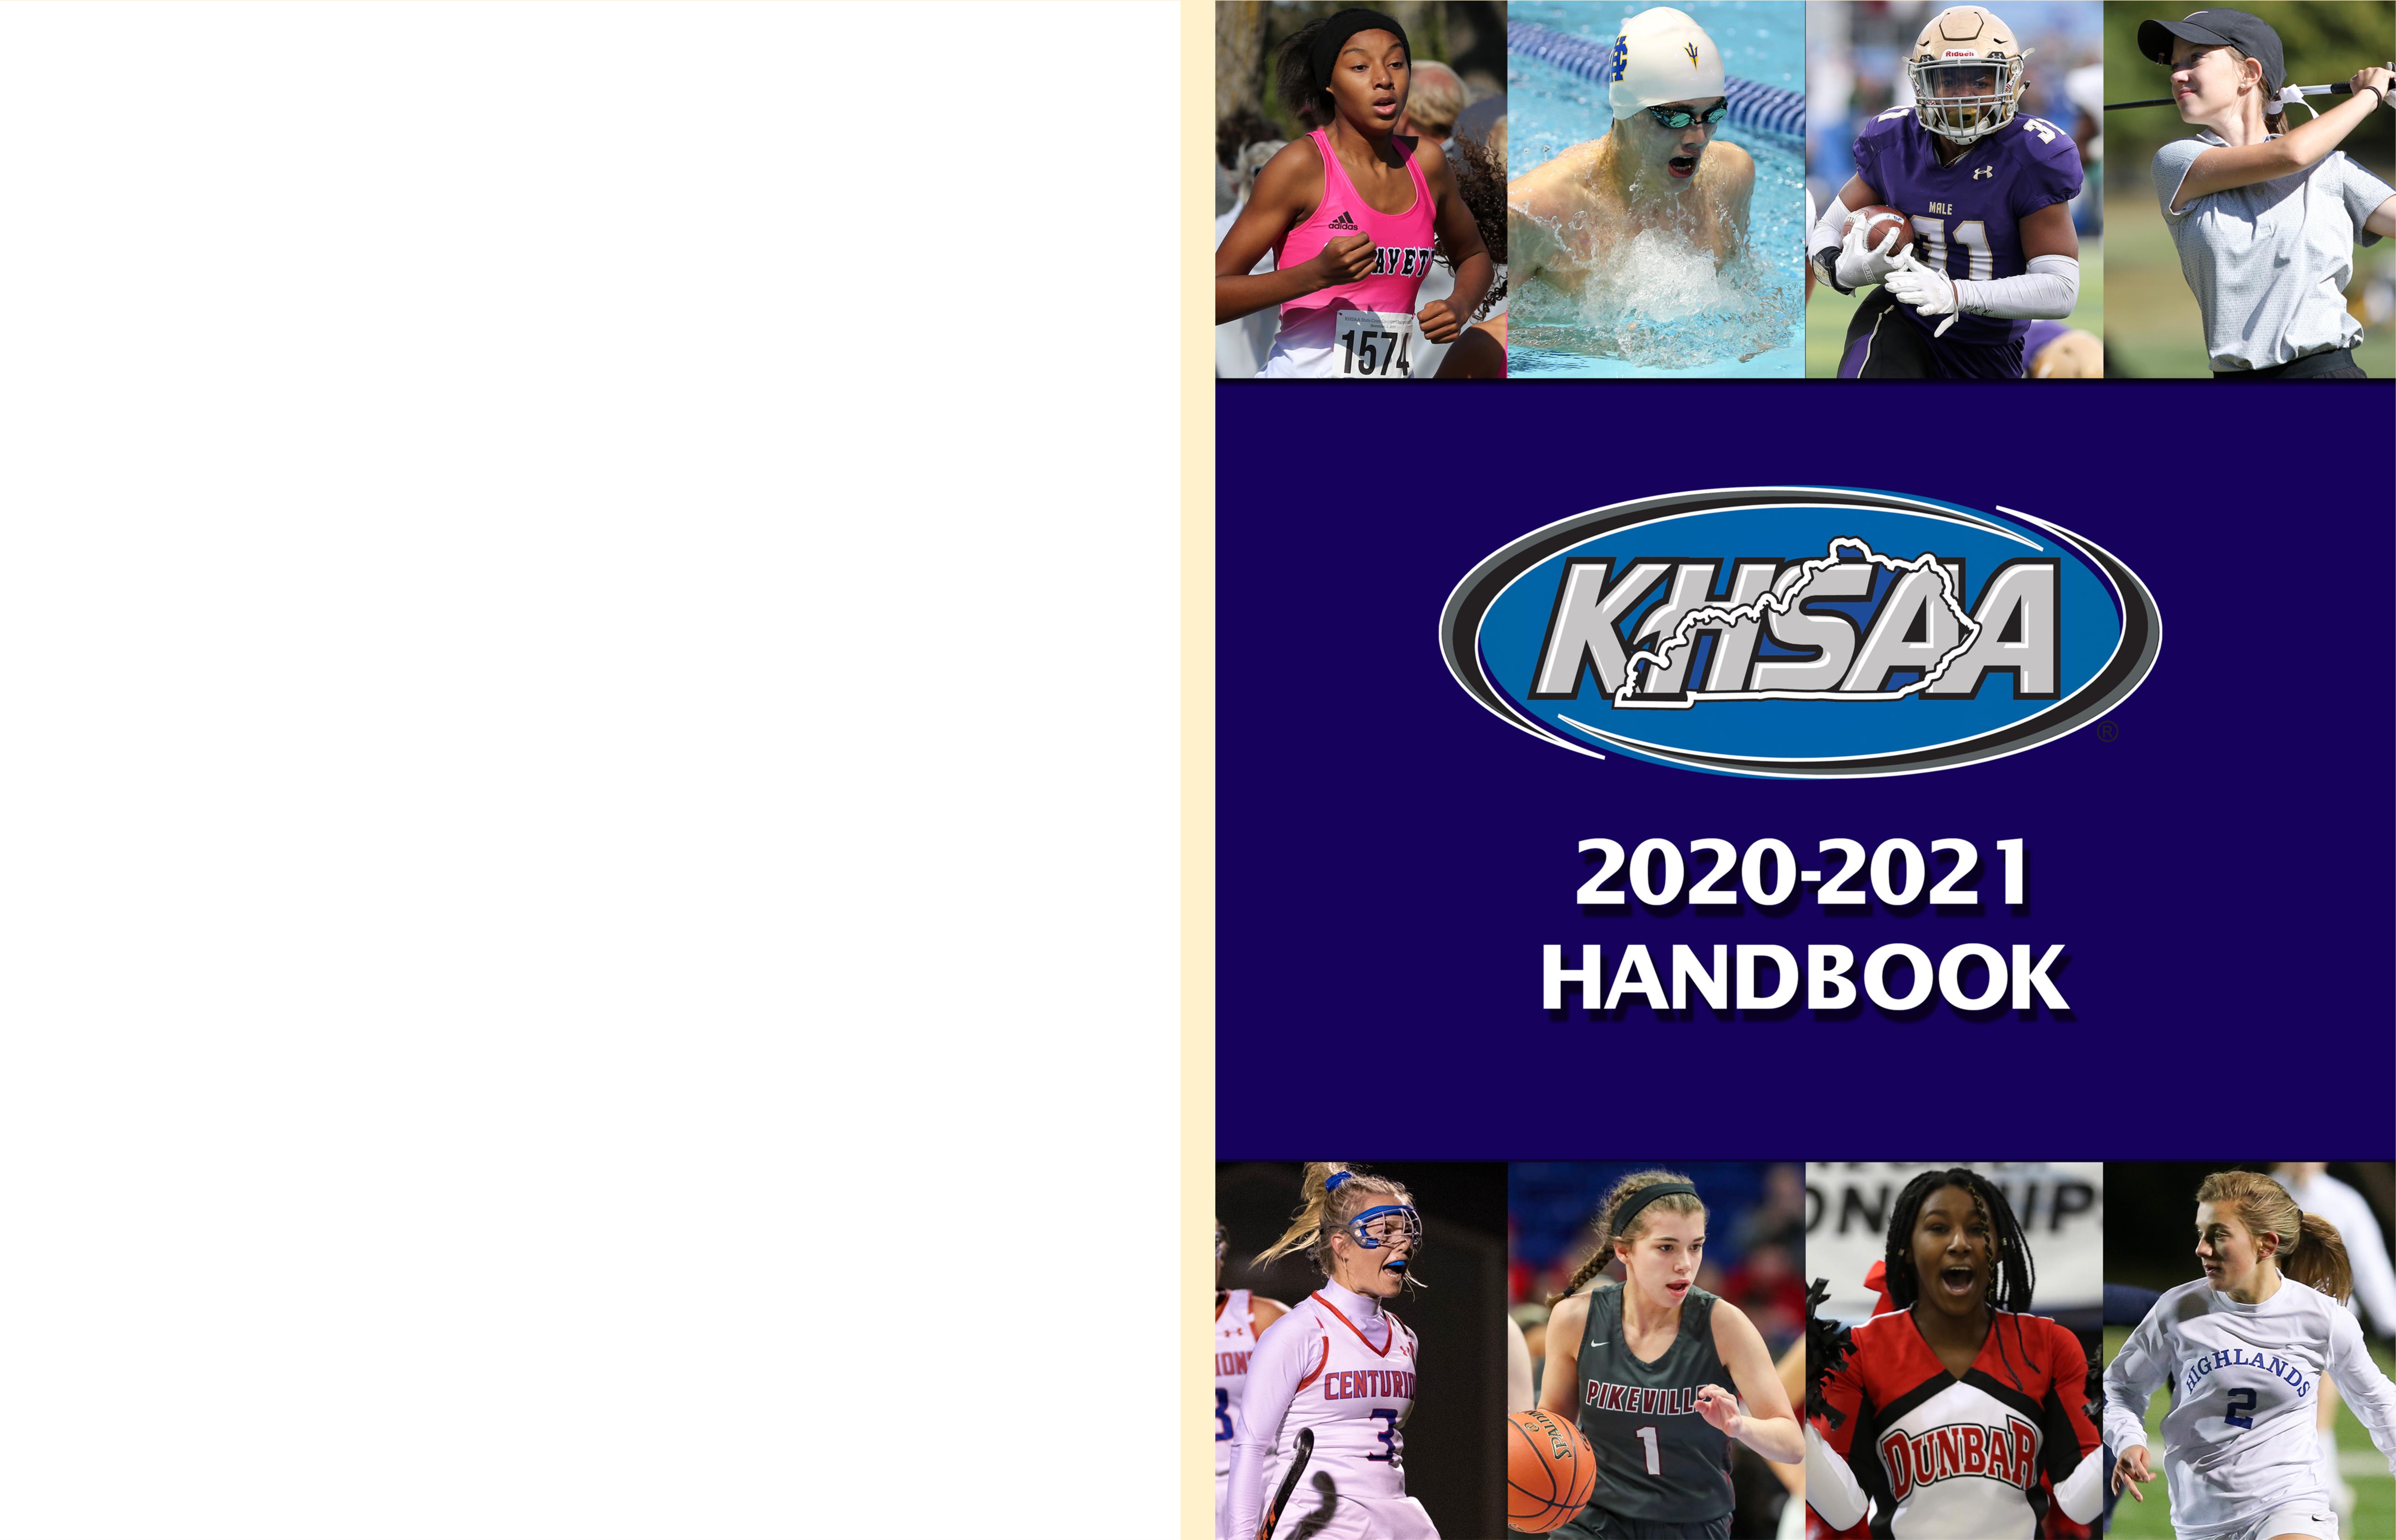 2020-2021 KHSAA Handbook cover image